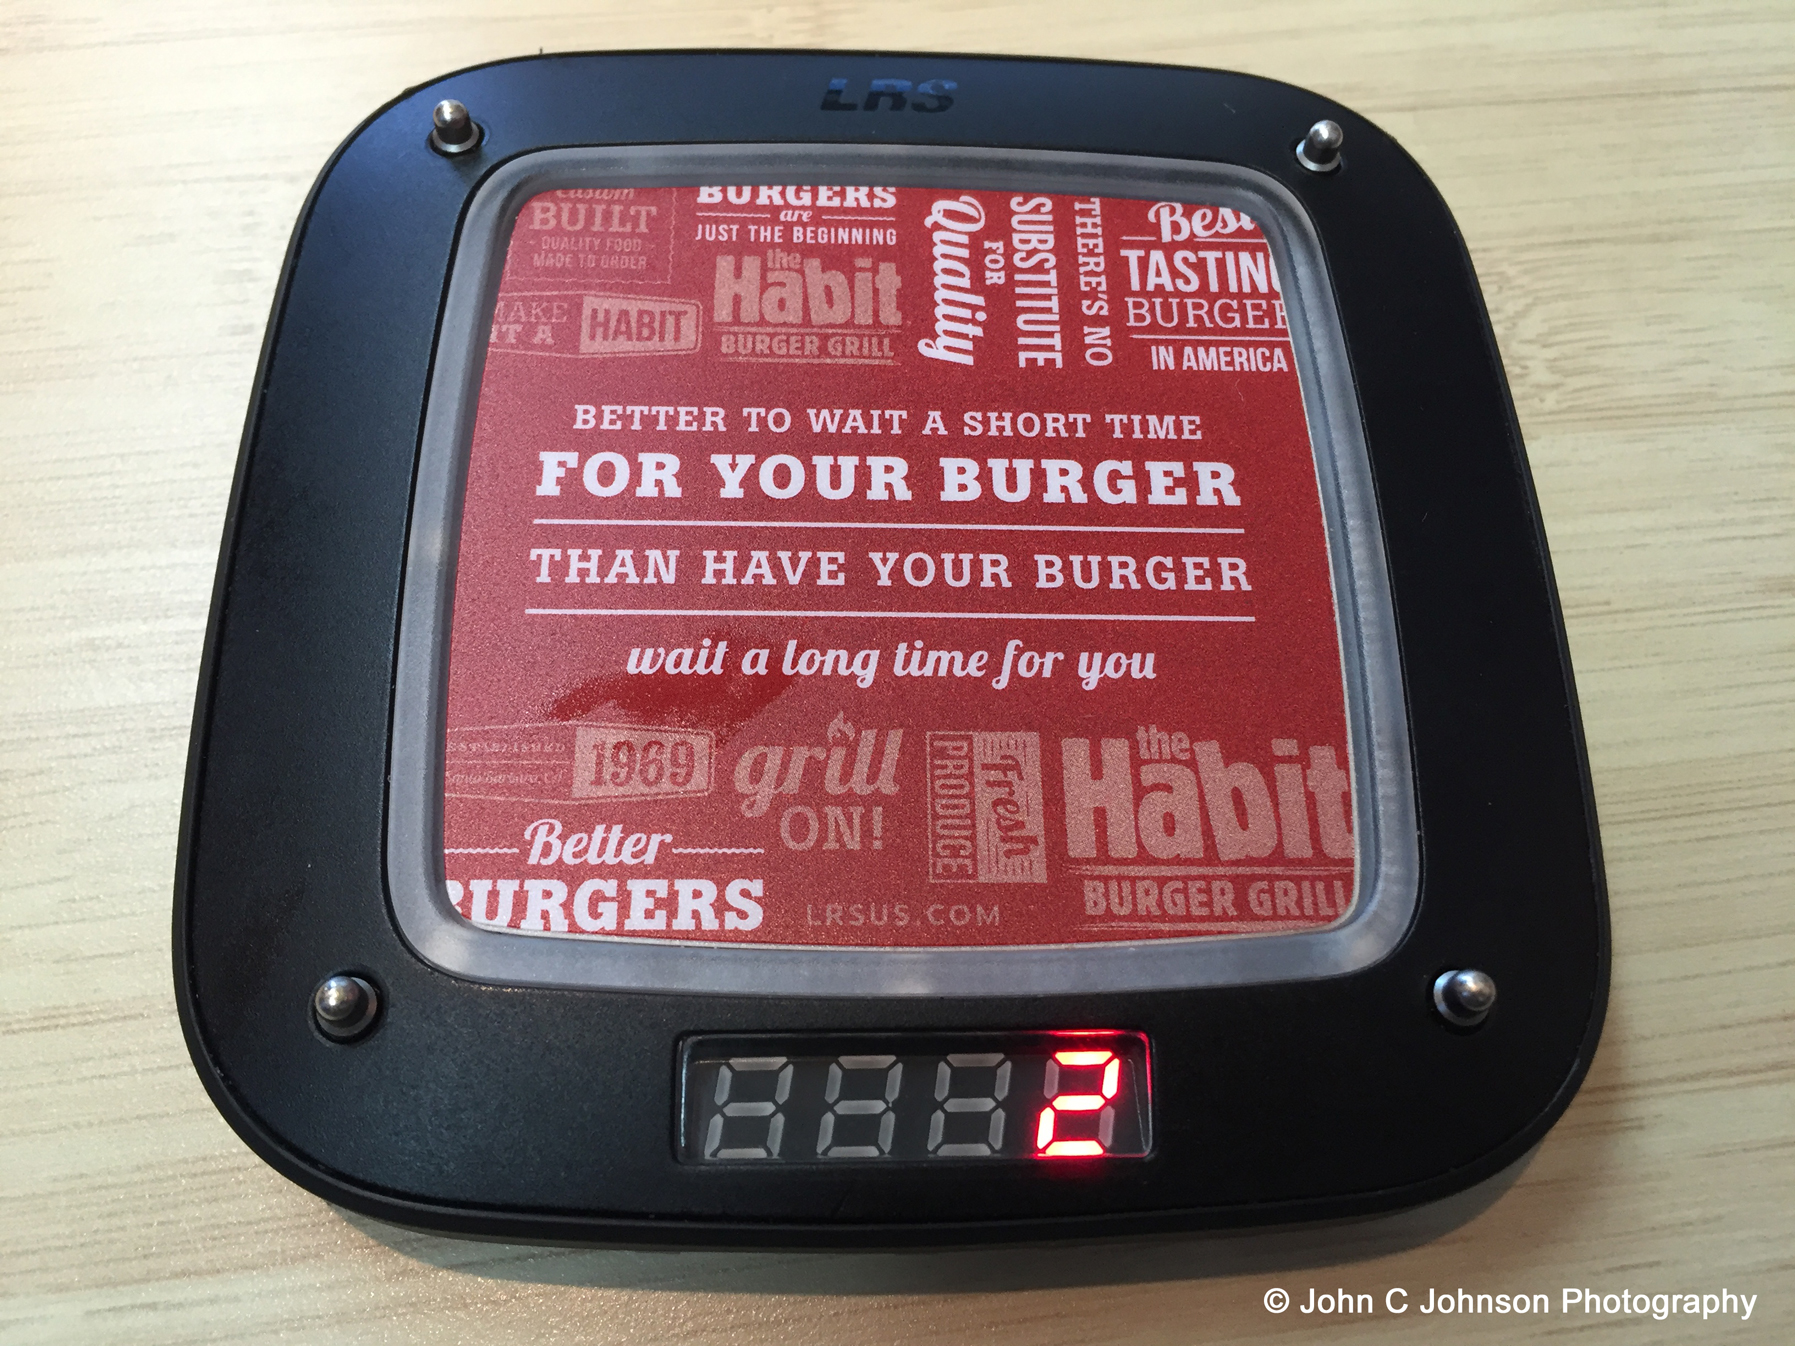 Habit Burger Grill Gilbert, Arizona